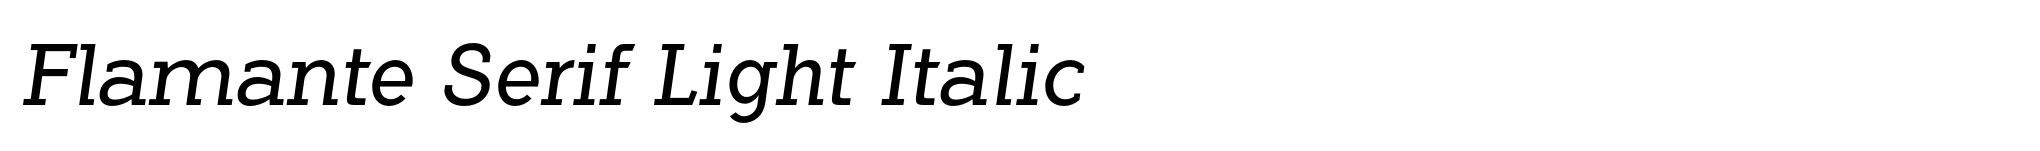 Flamante Serif Light Italic image